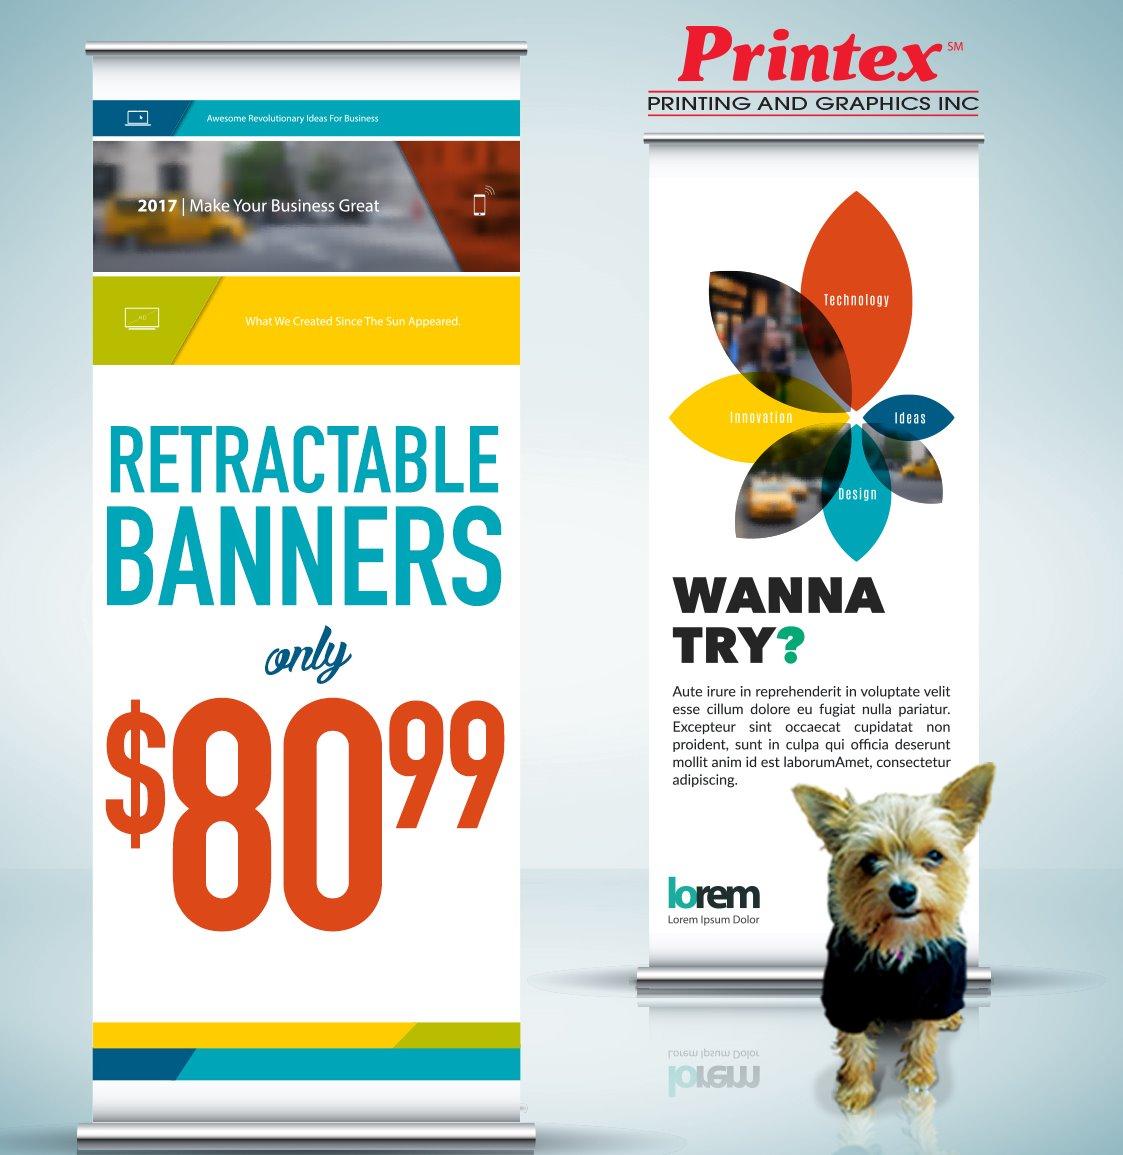 Printex Printing and Graphics Inc Photo